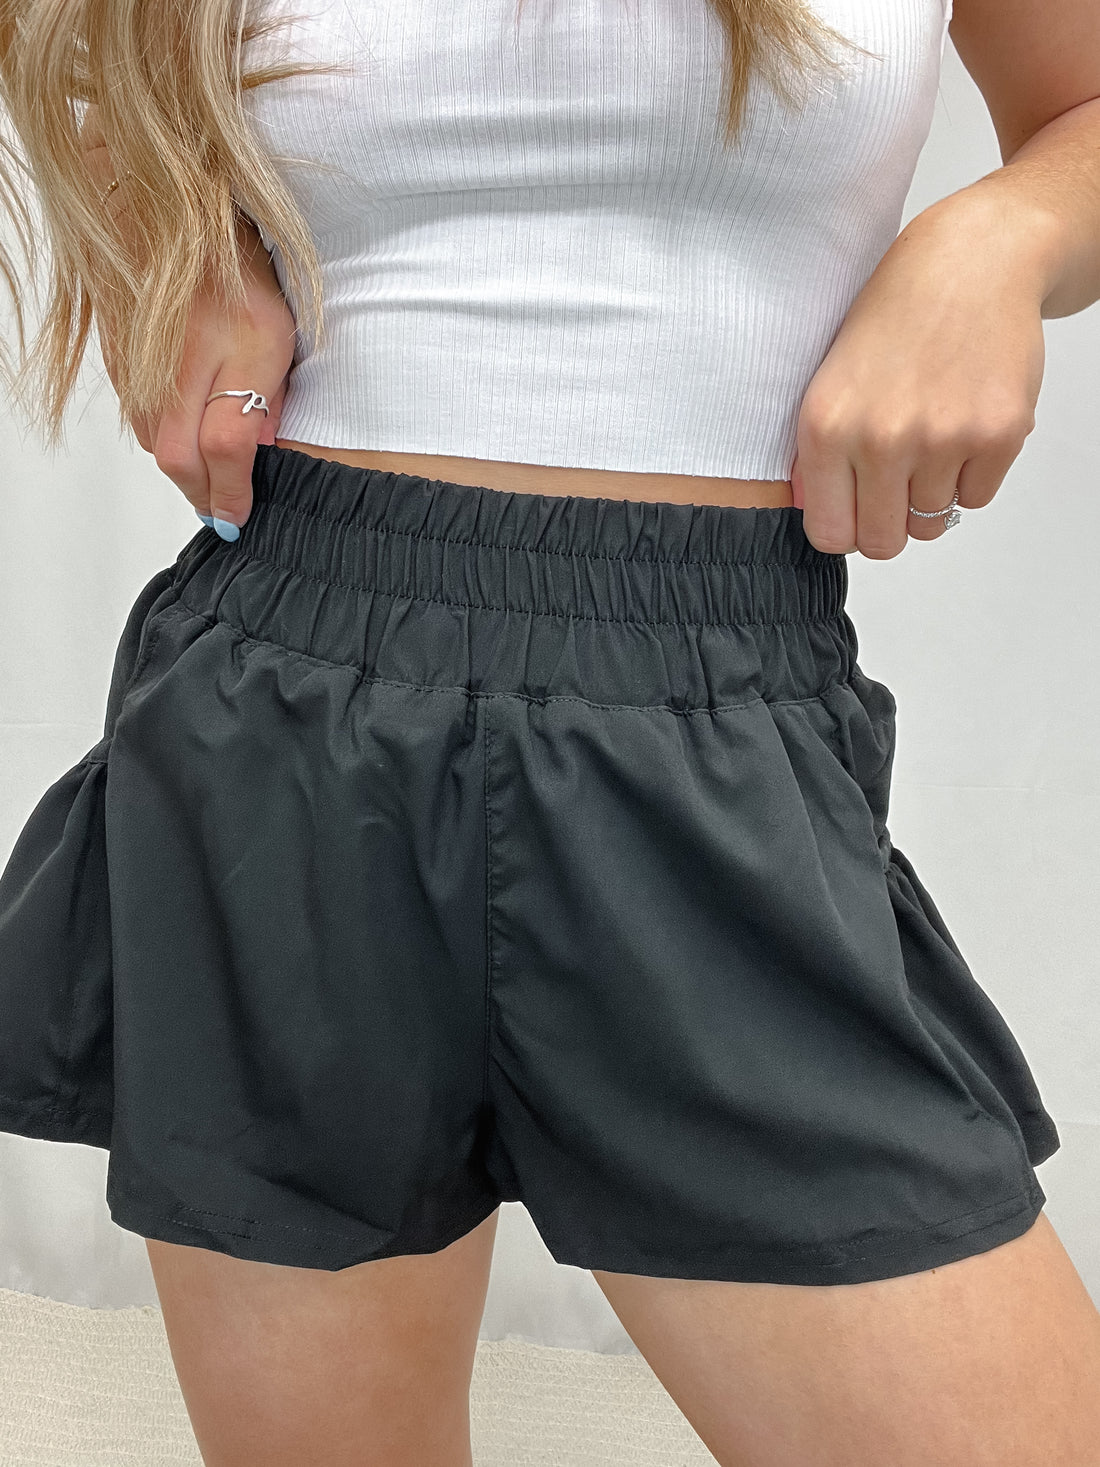 Summer Staple Shorts